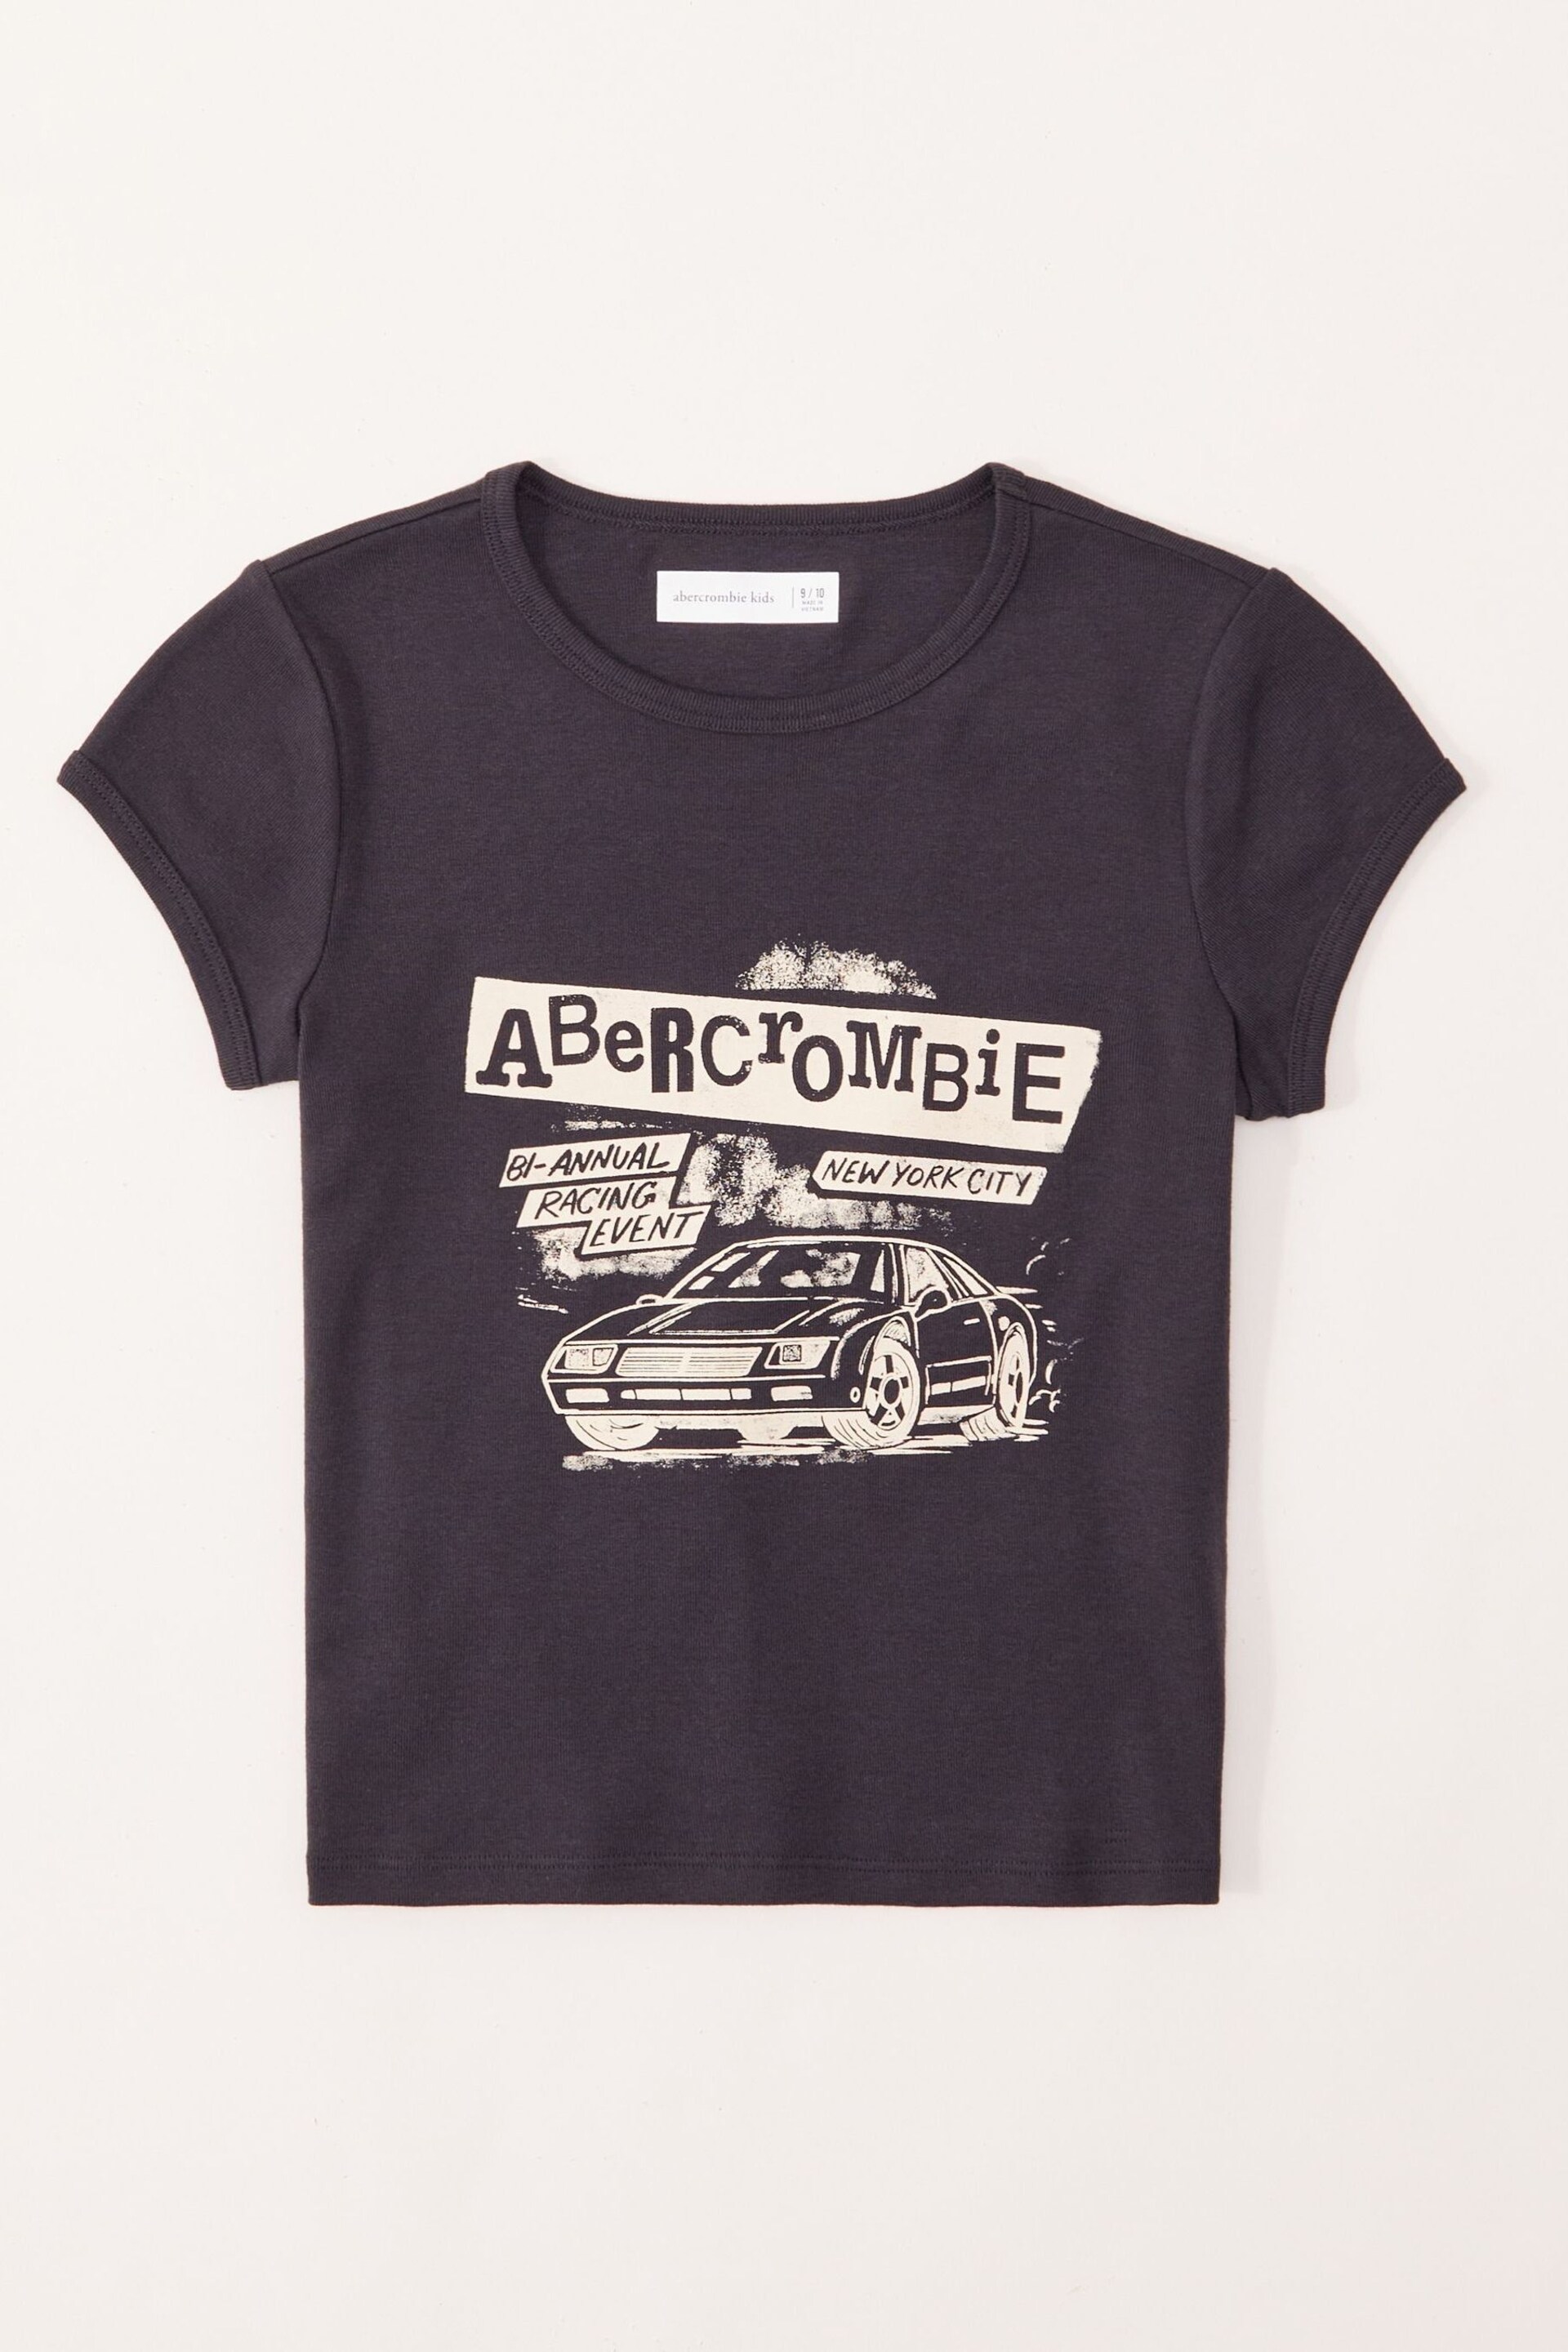 Abercrombie & Fitch Western Logo Short Sleeve Black T-Shirt - Image 1 of 1